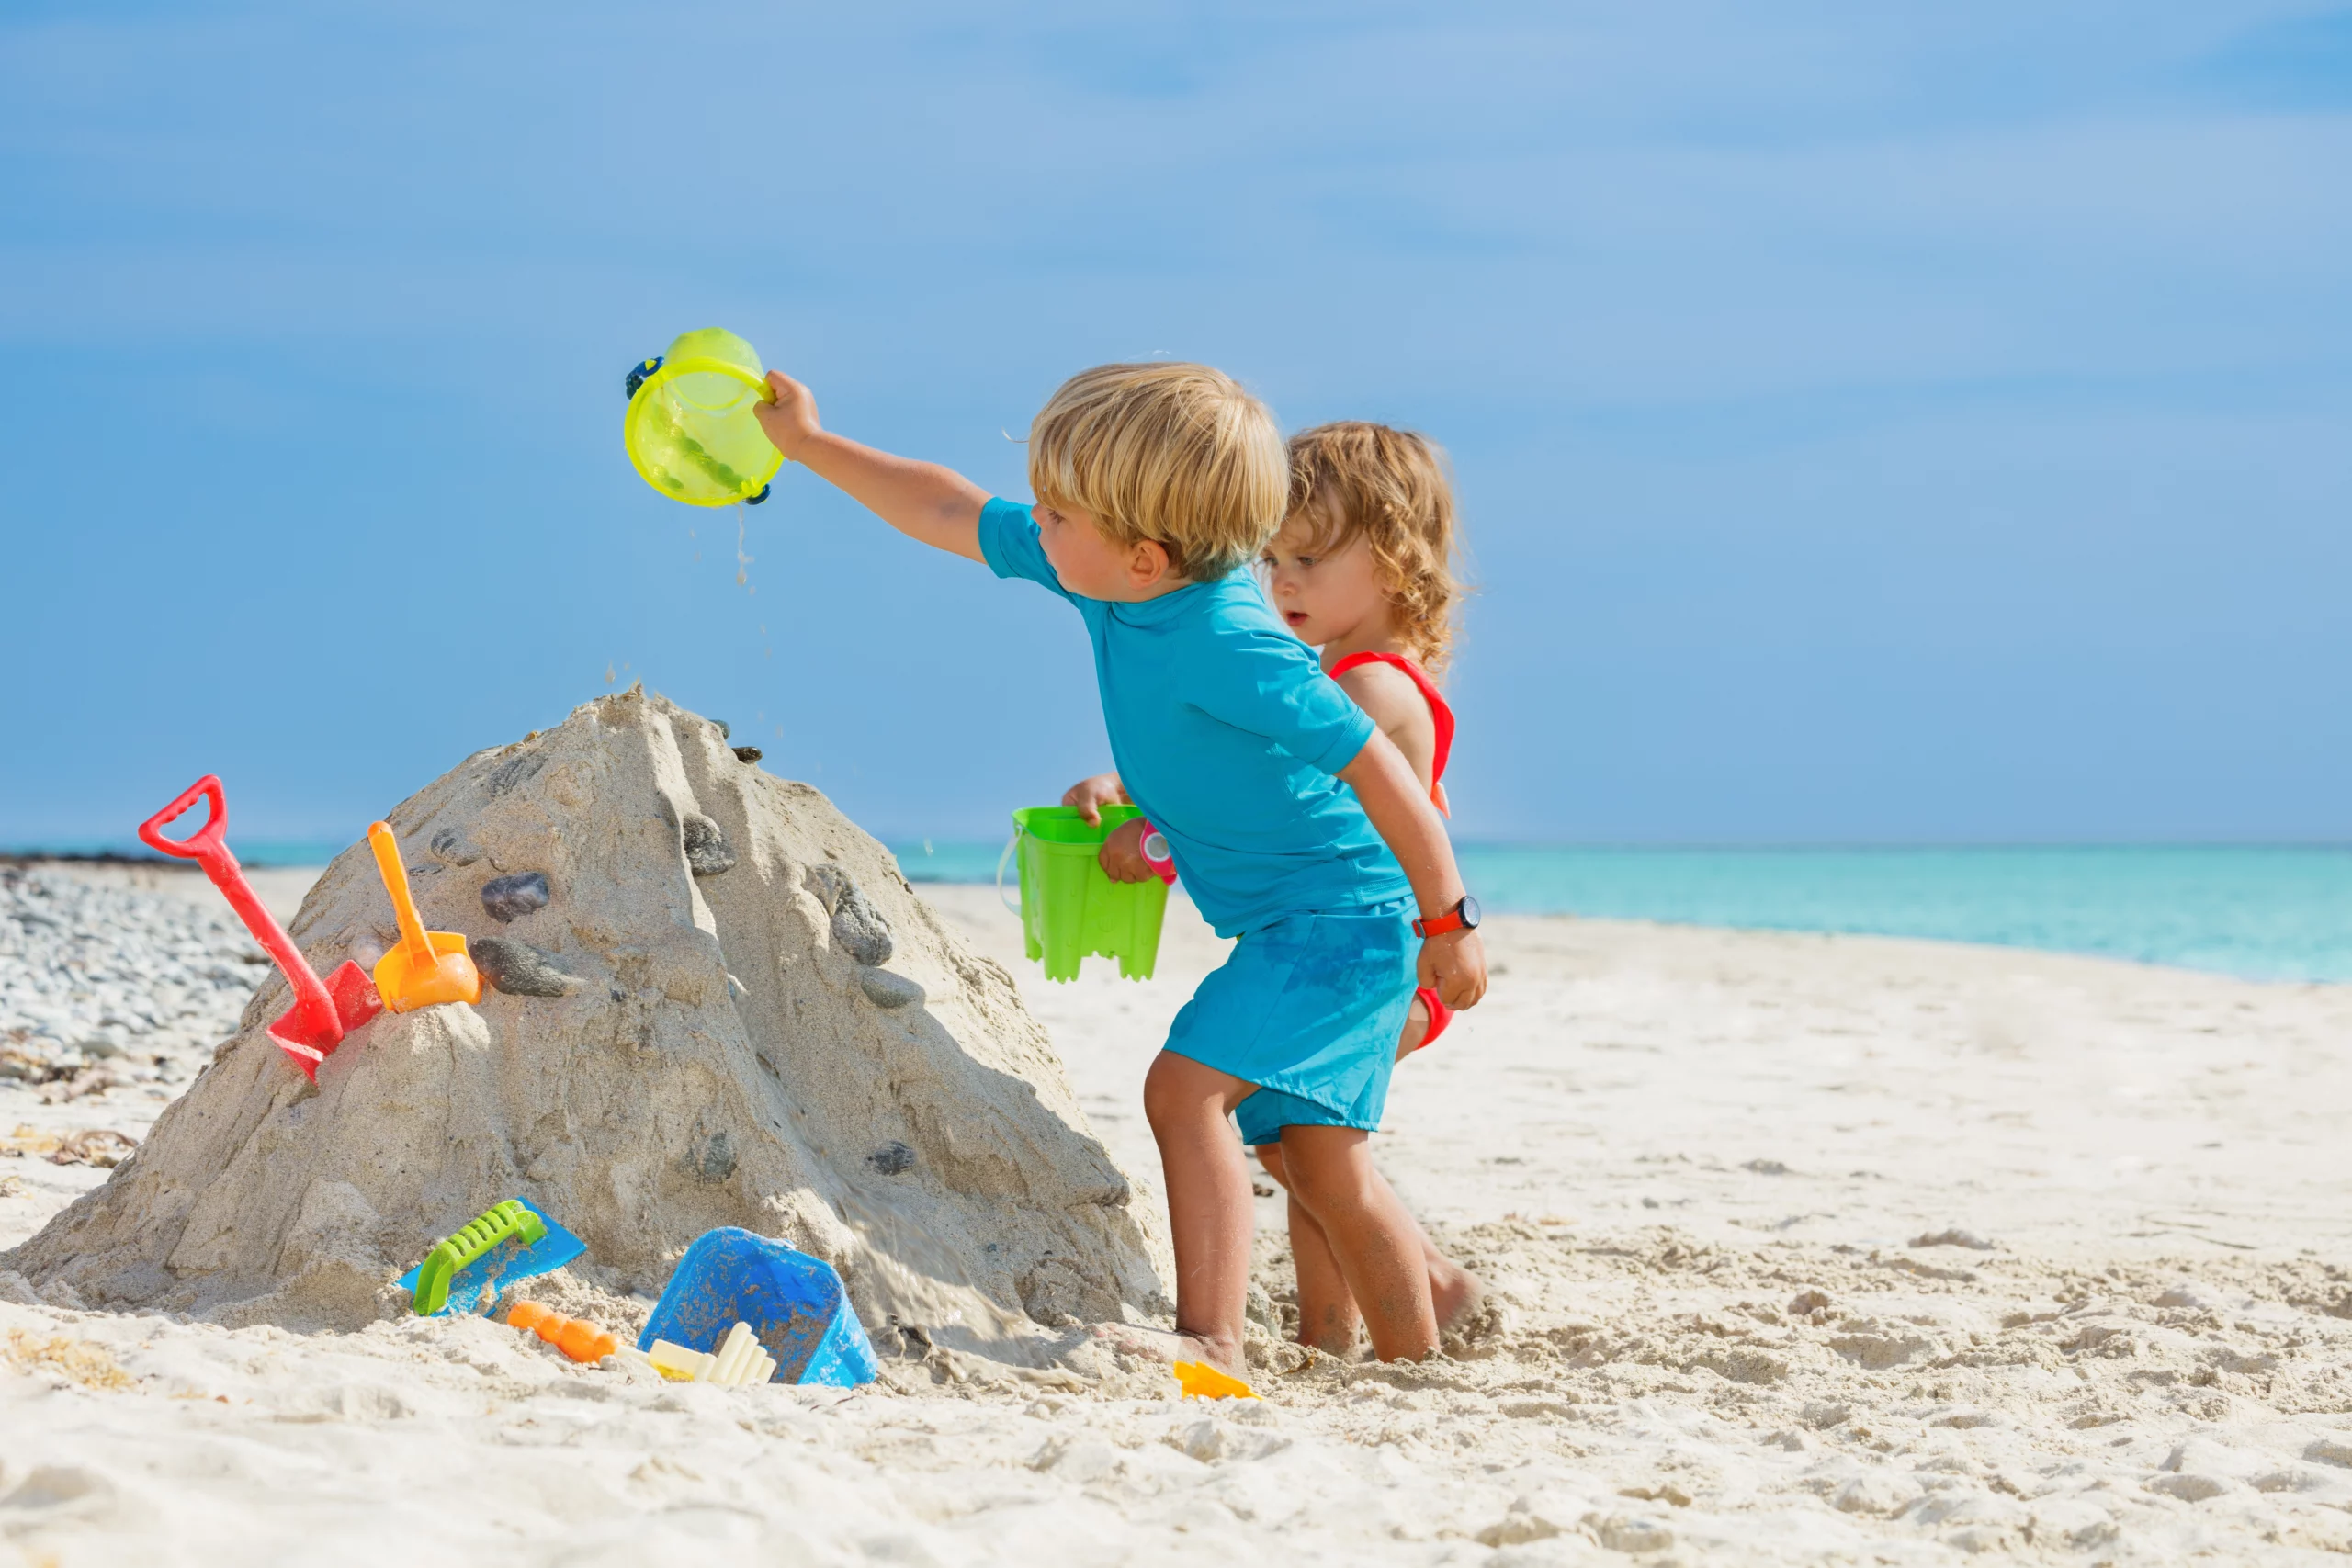 free activities for kids - hit the beach | Swoosh Finance